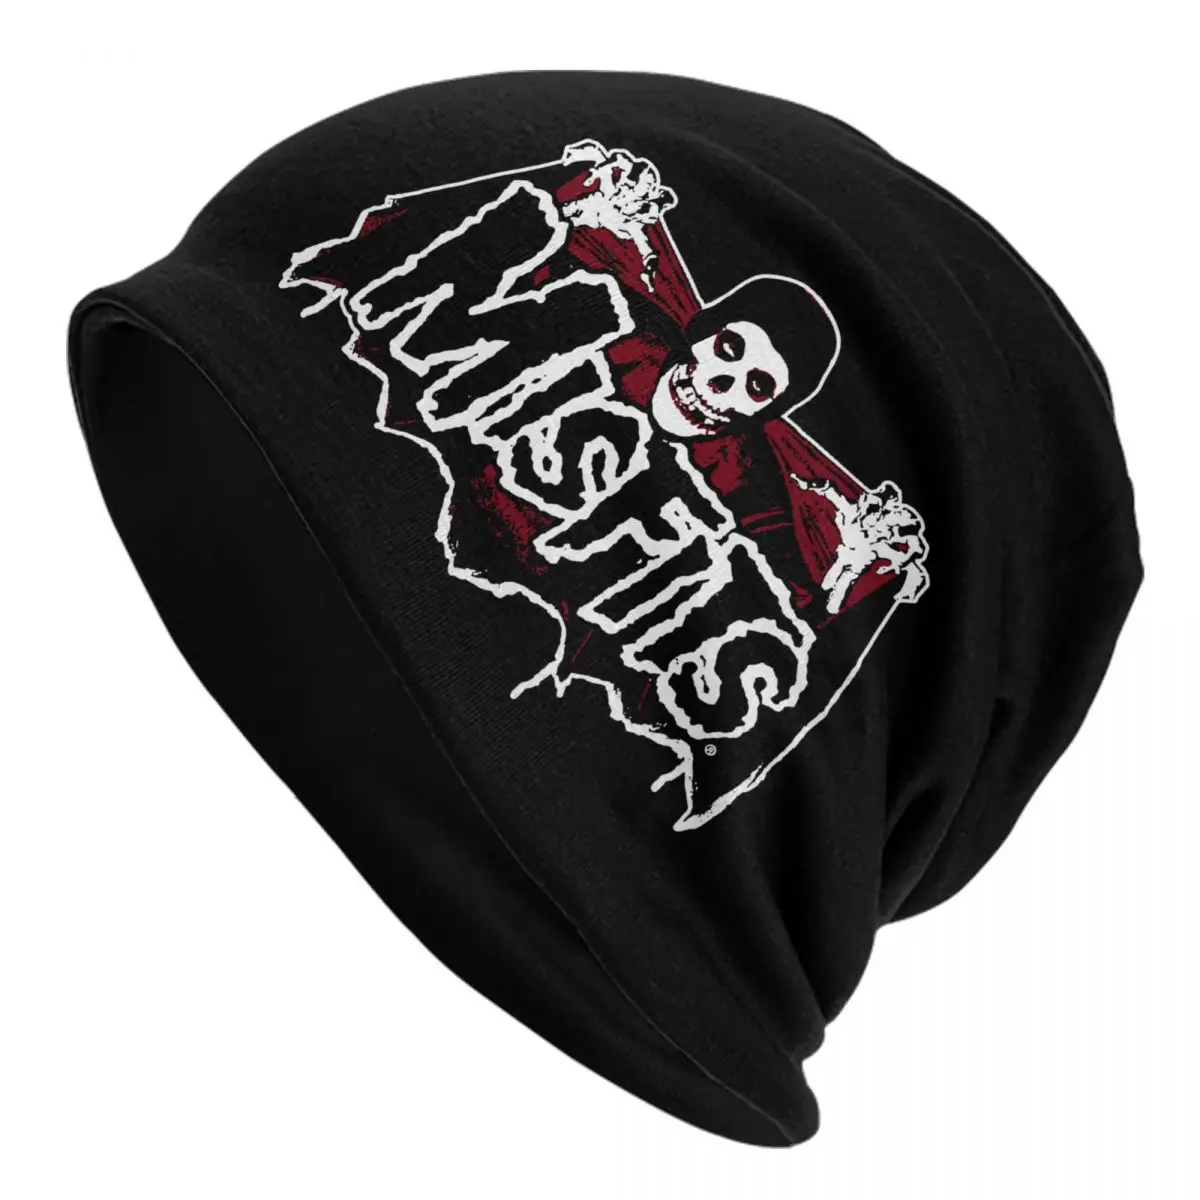 

Horror Punk Rock Misfits Skull Bonnet Hats Fashion Knitted Hat For Women Men Autumn Winter Warm Skullies Beanies Caps